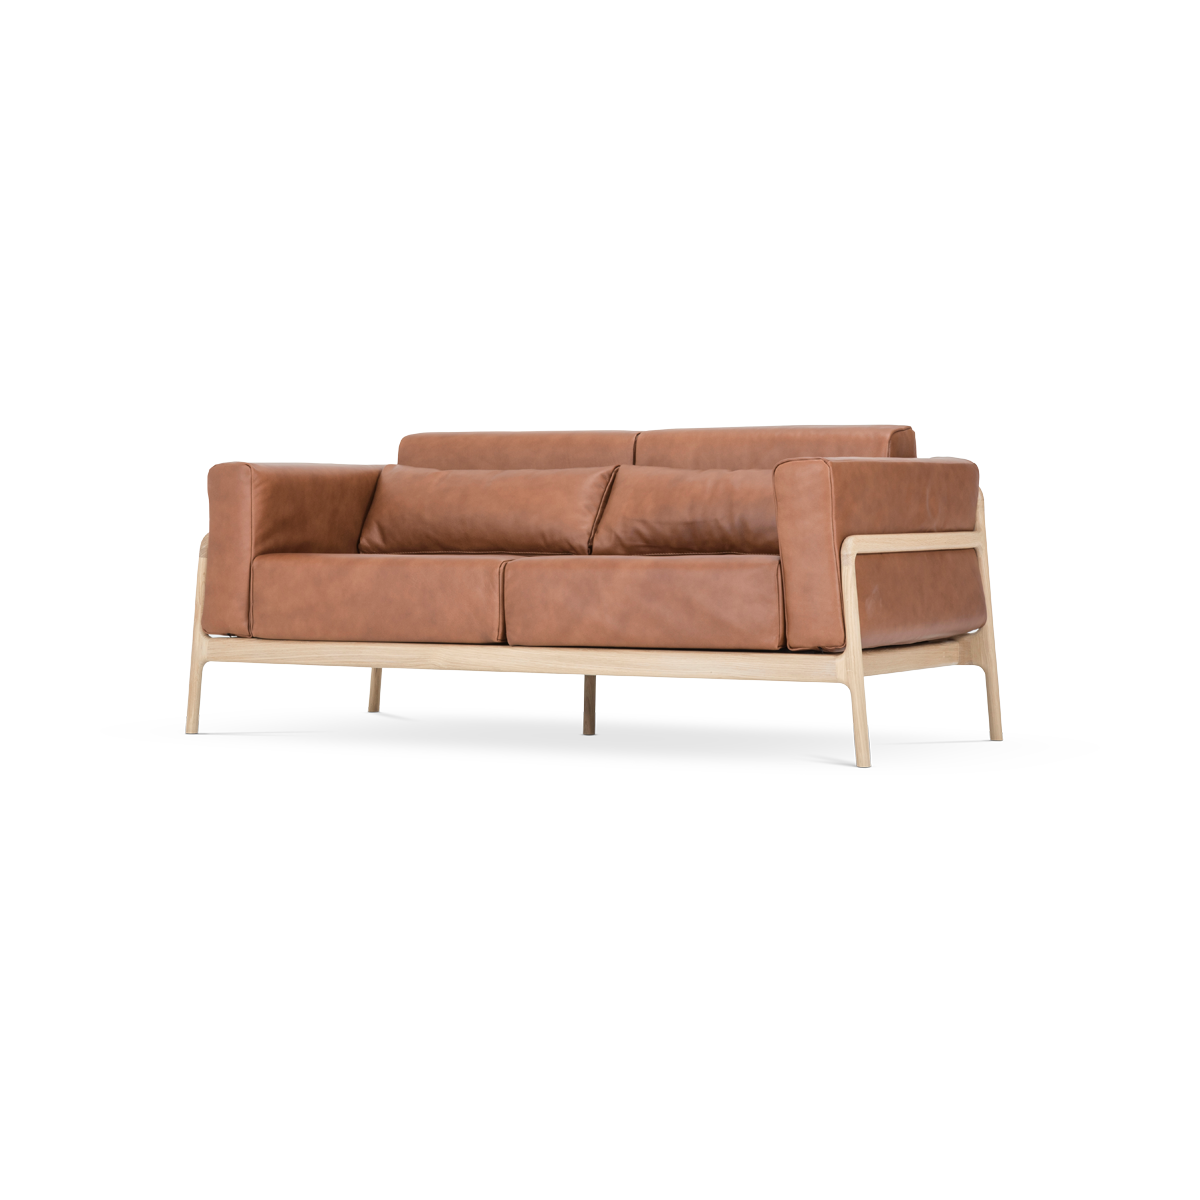 Fawn sofa 2 seater bank dakar leather whiskey 2732 - 180 cm